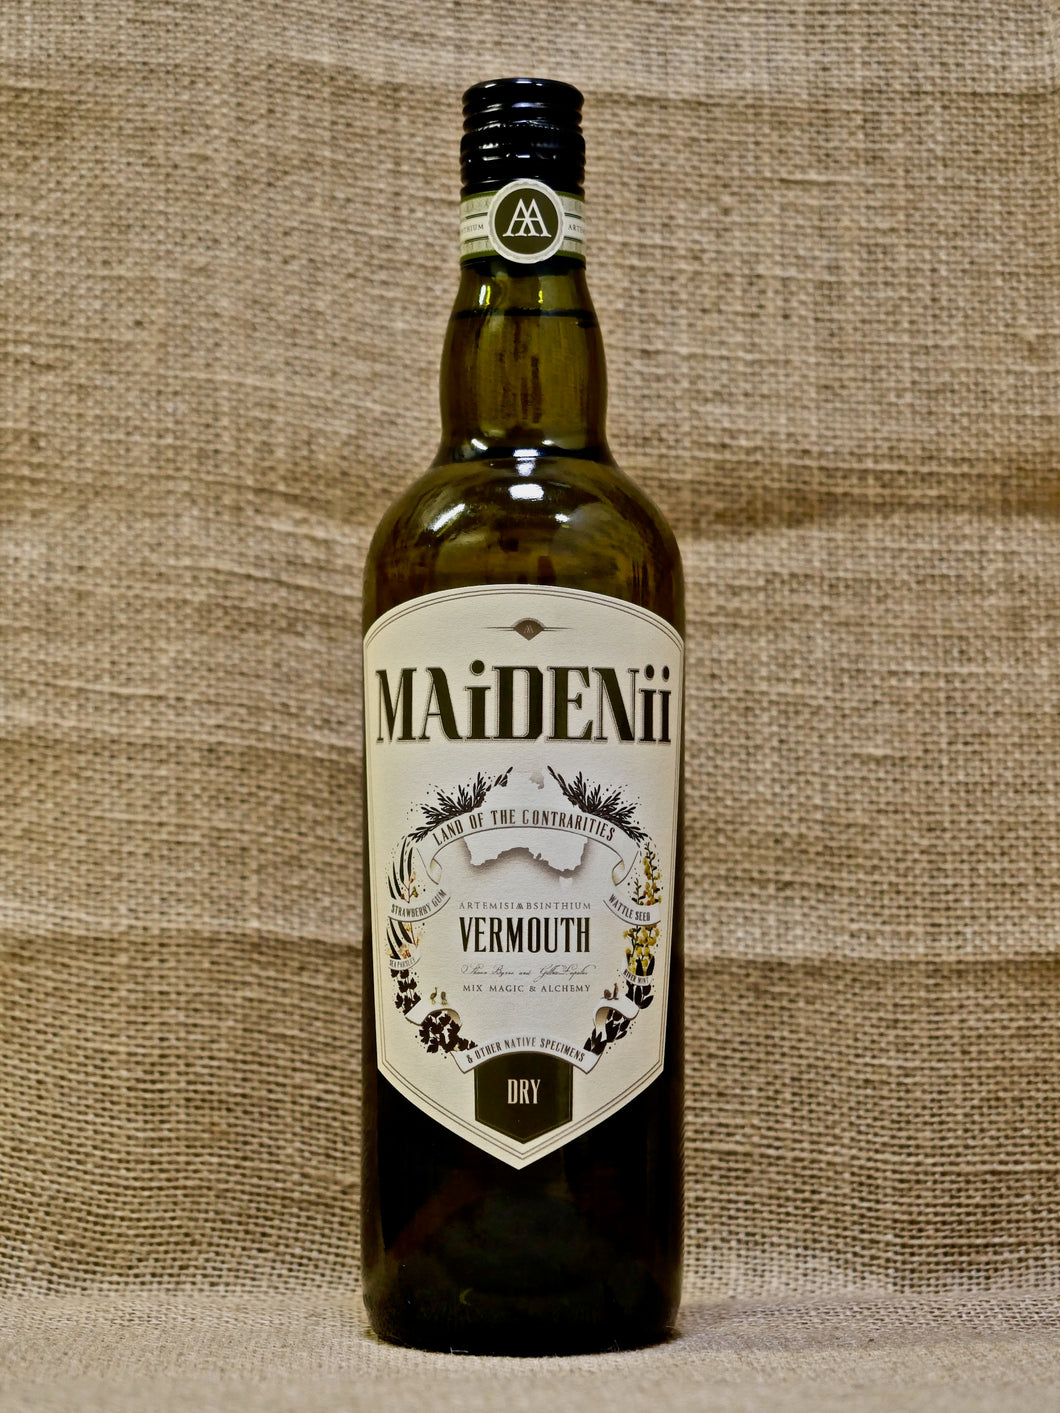 Maidenii Vermouth Dry